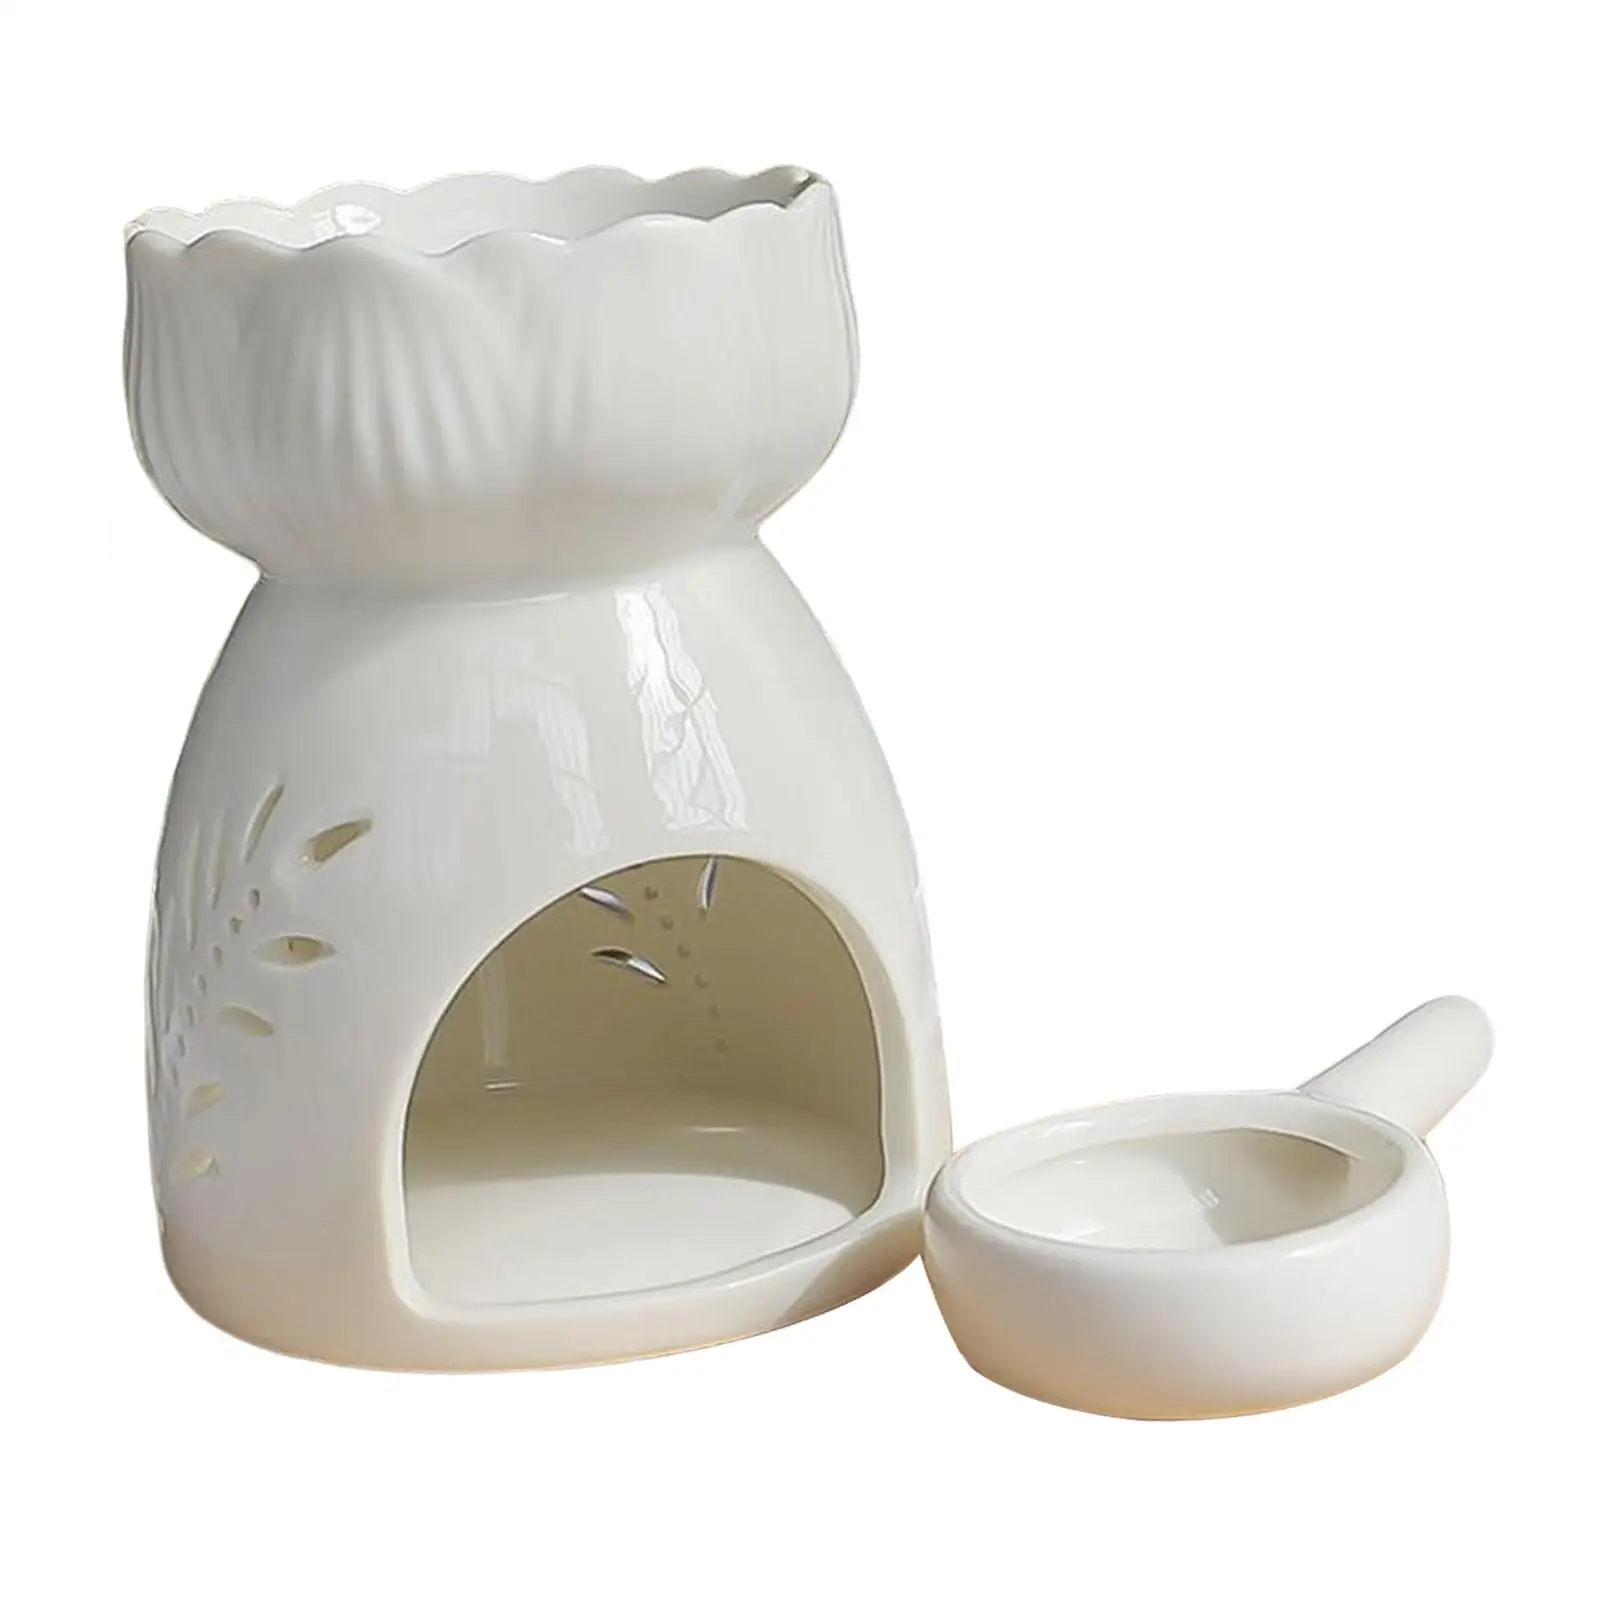 Ceramic Tealight Holder Tealight Candle Holder Lamp for Travel